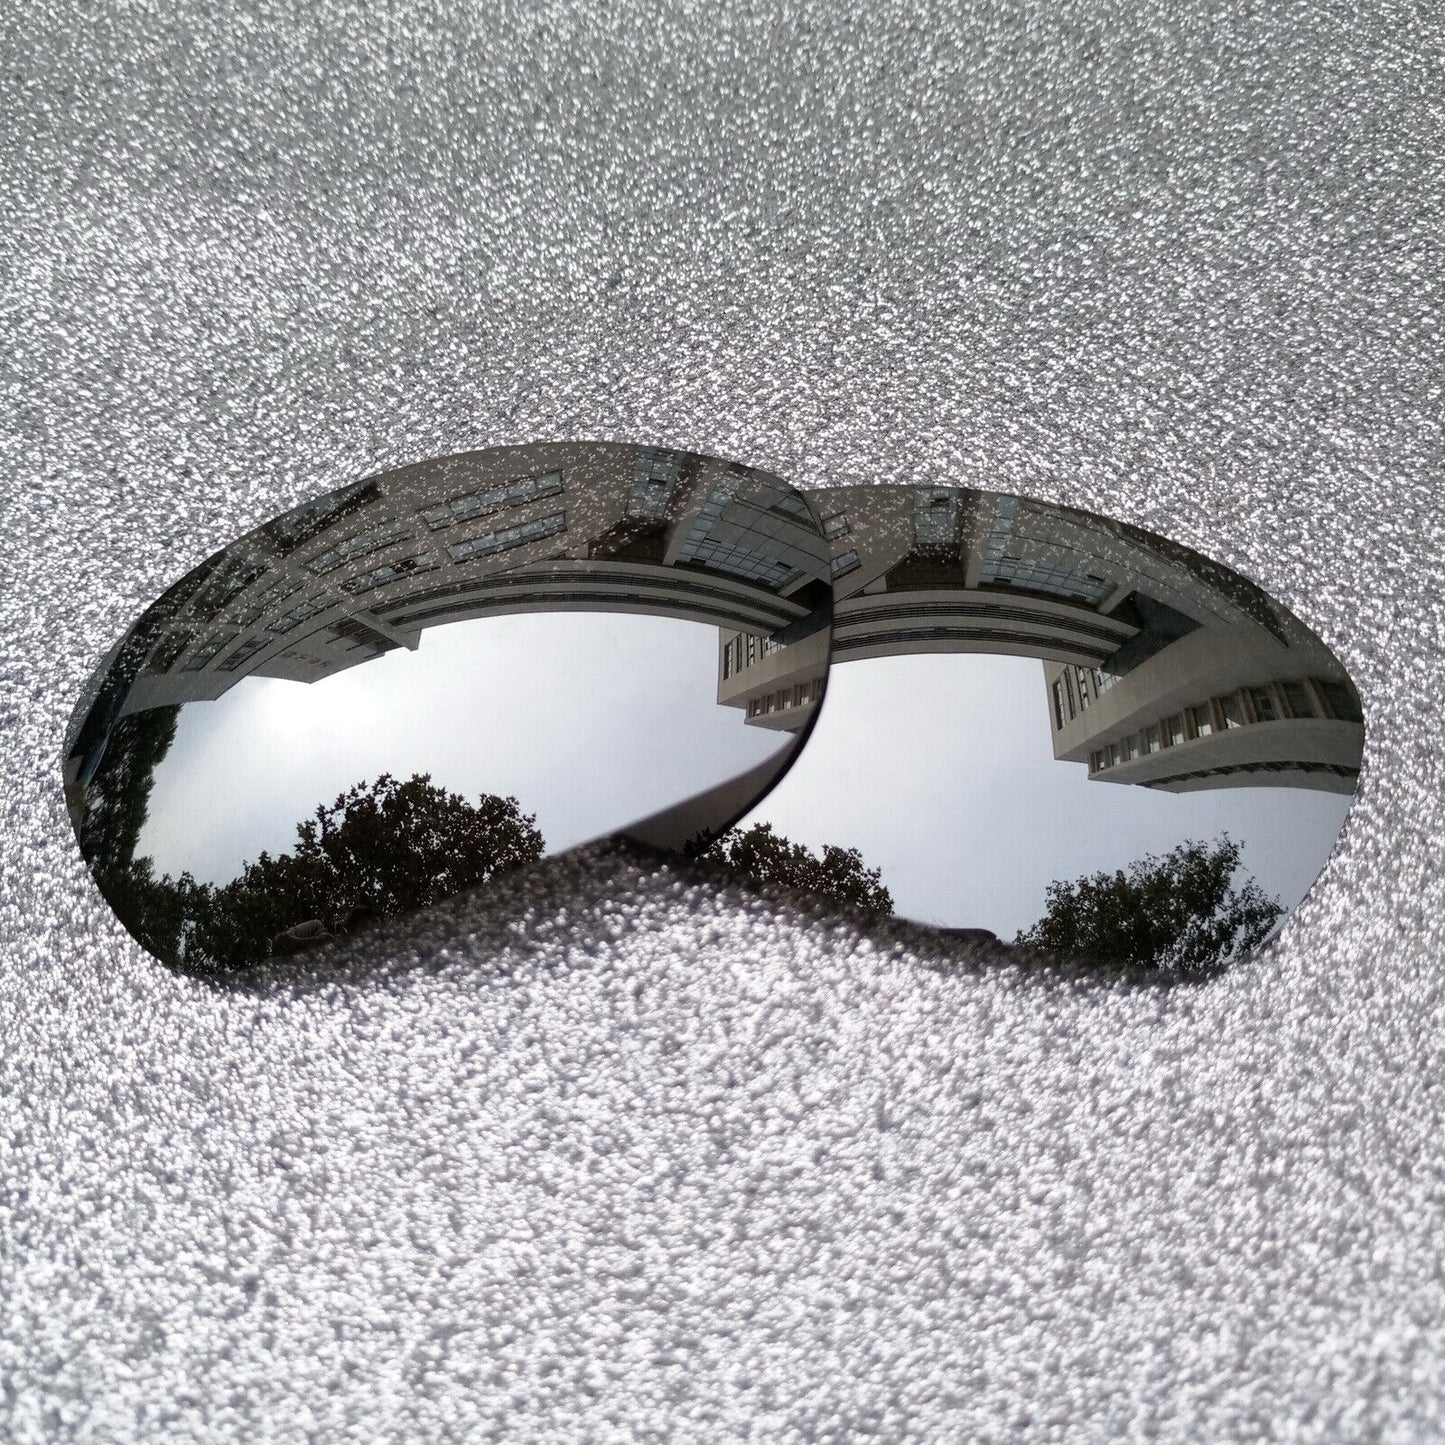 ExpressReplacement Polarized Lenses For-Oakley Monster Dog Frame